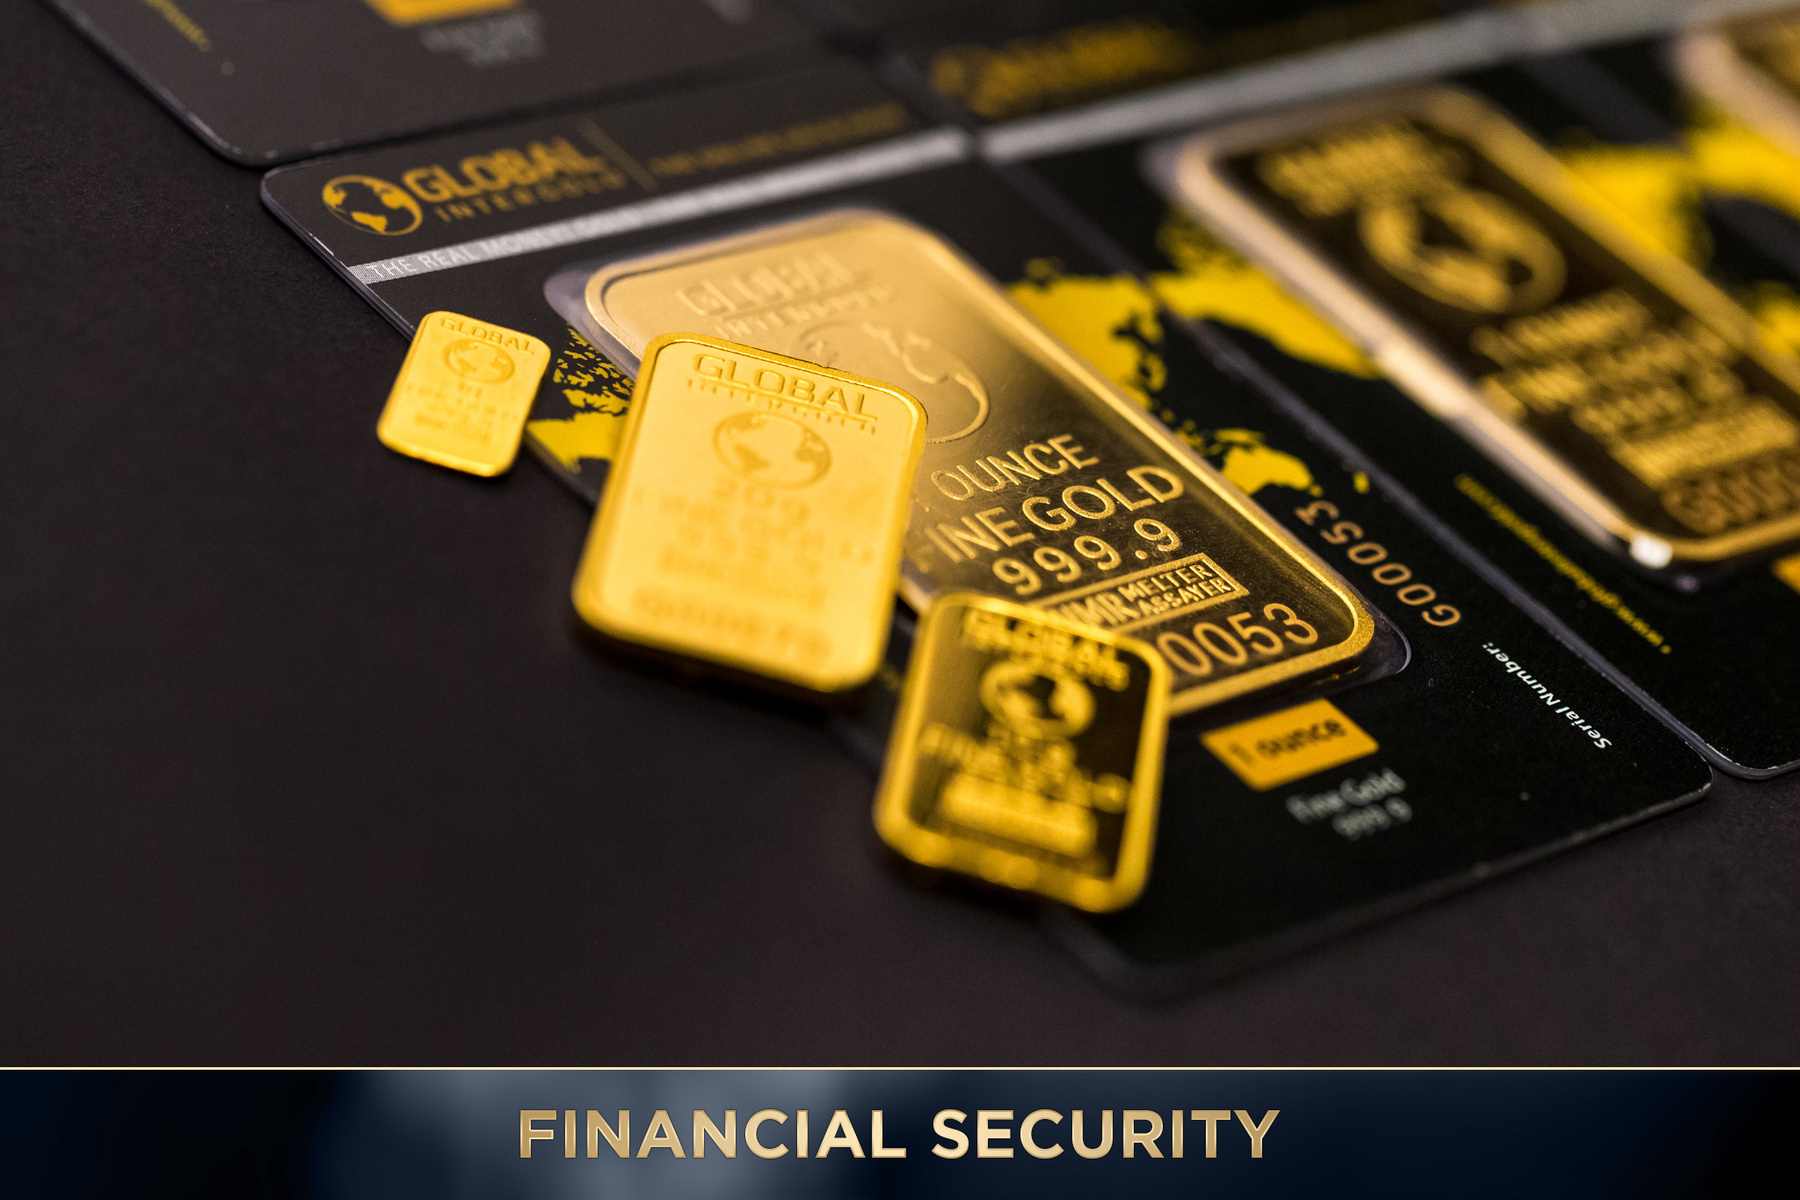 *** financial security foundation of Global Intergold Financial goldismoney goldshop